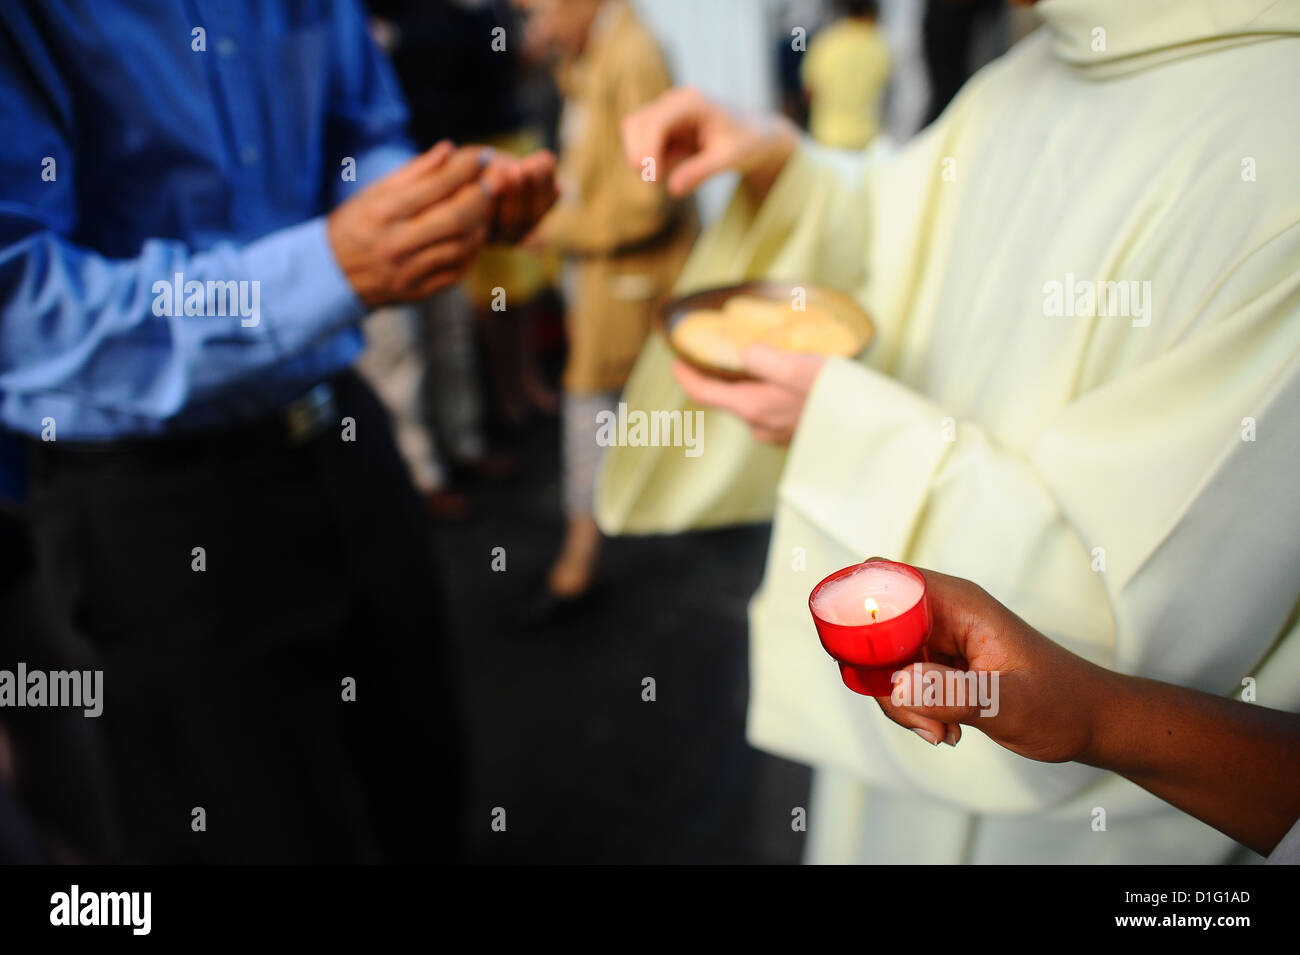 Catholic communion candle hi-res stock photography and images - Alamy